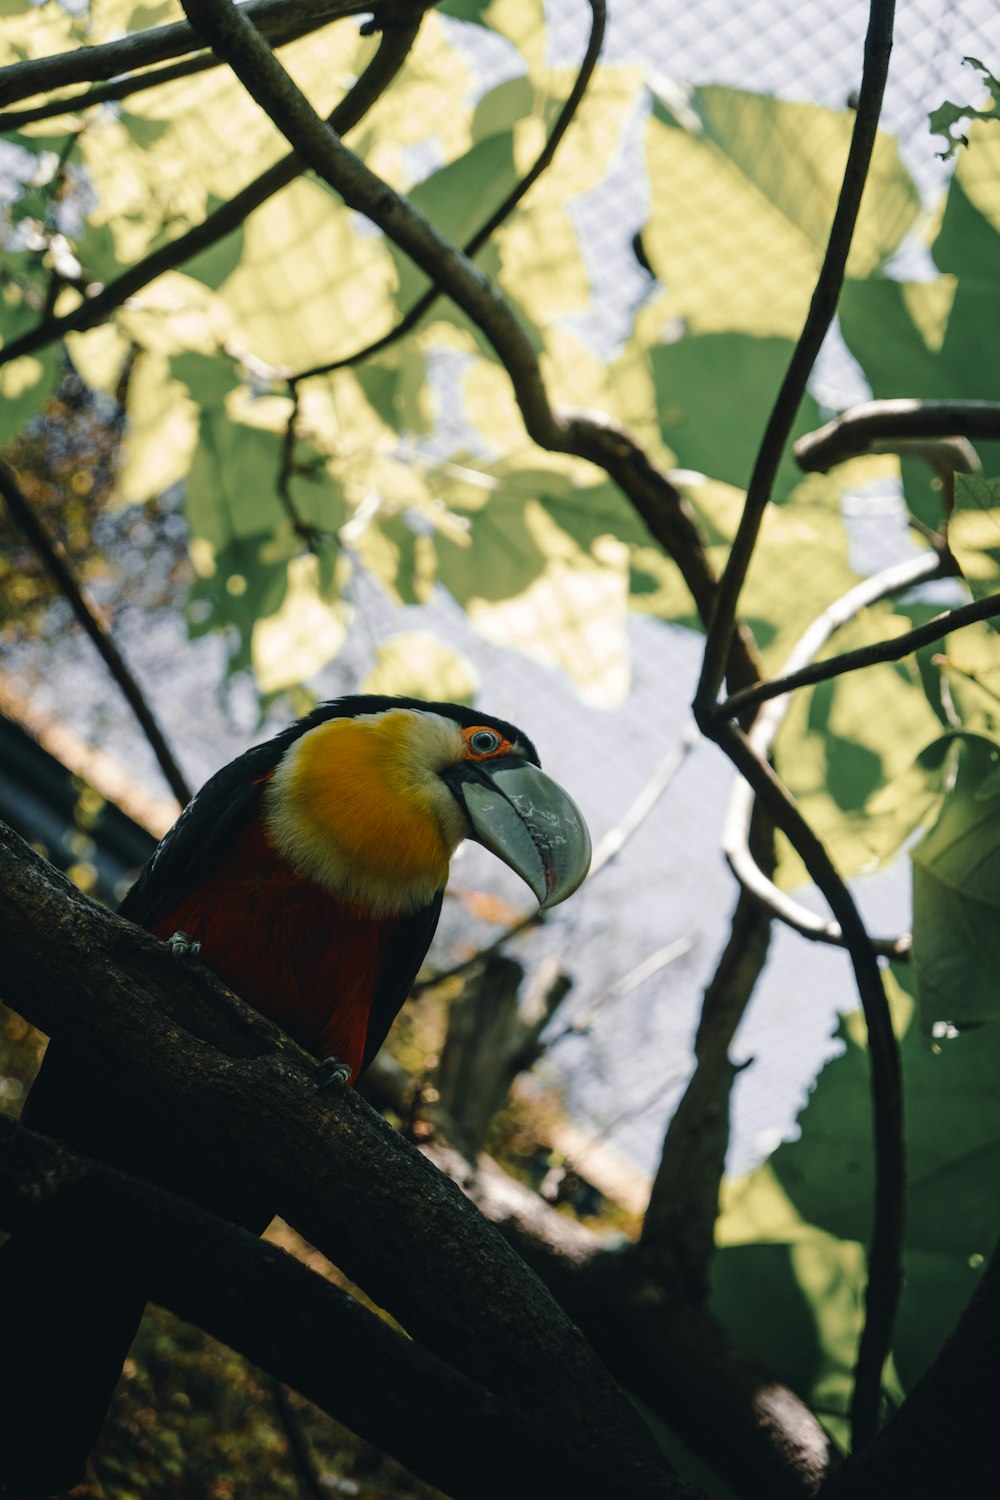 orange, black, and yellow large-beaked bird